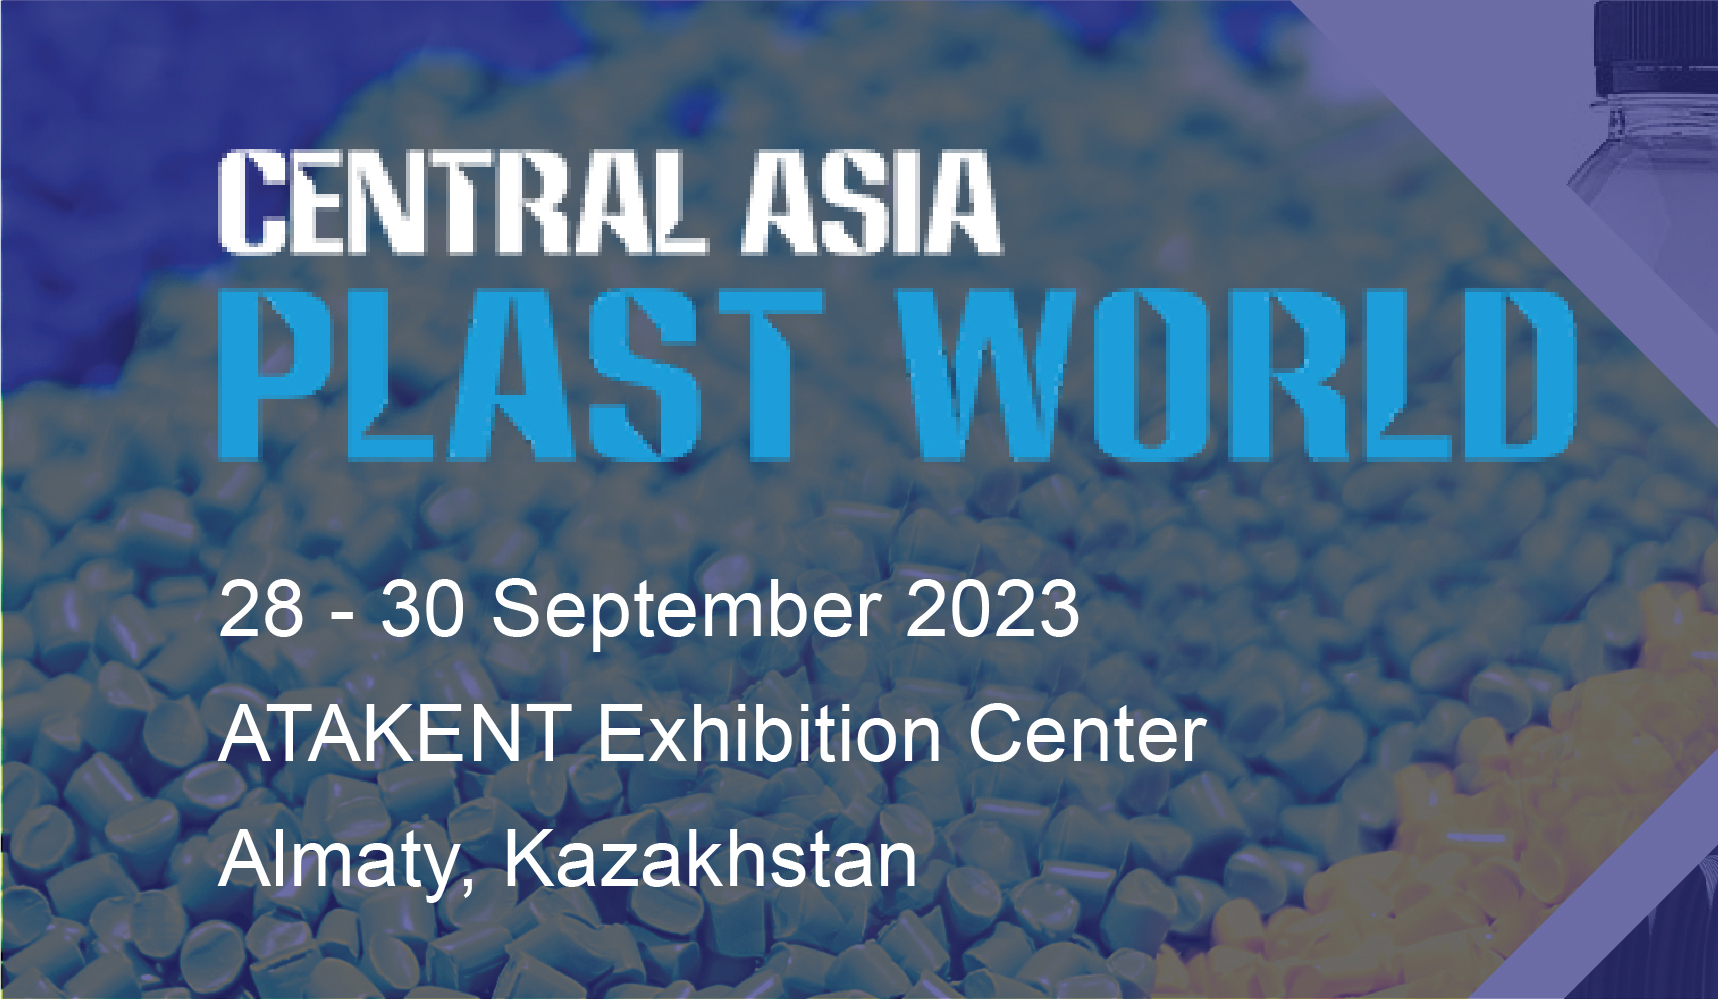 Central Asia Plast World丨INVITATION